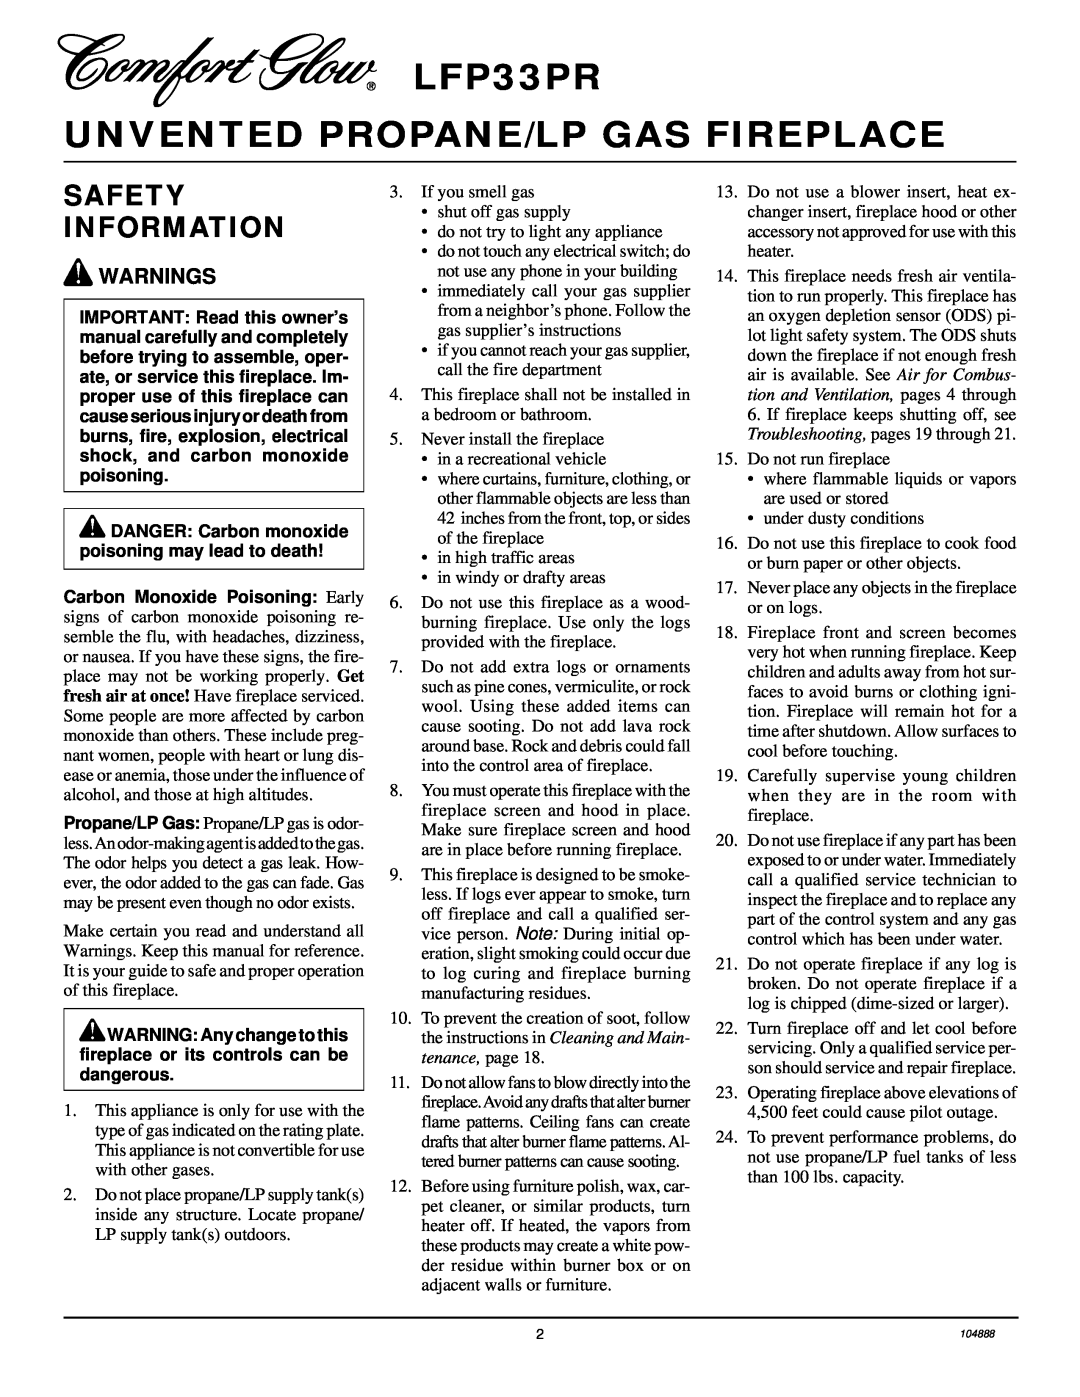 Desa installation manual LFP33PR UNVENTED PROPANE/LP GAS FIREPLACE, Safety Information, Warnings 